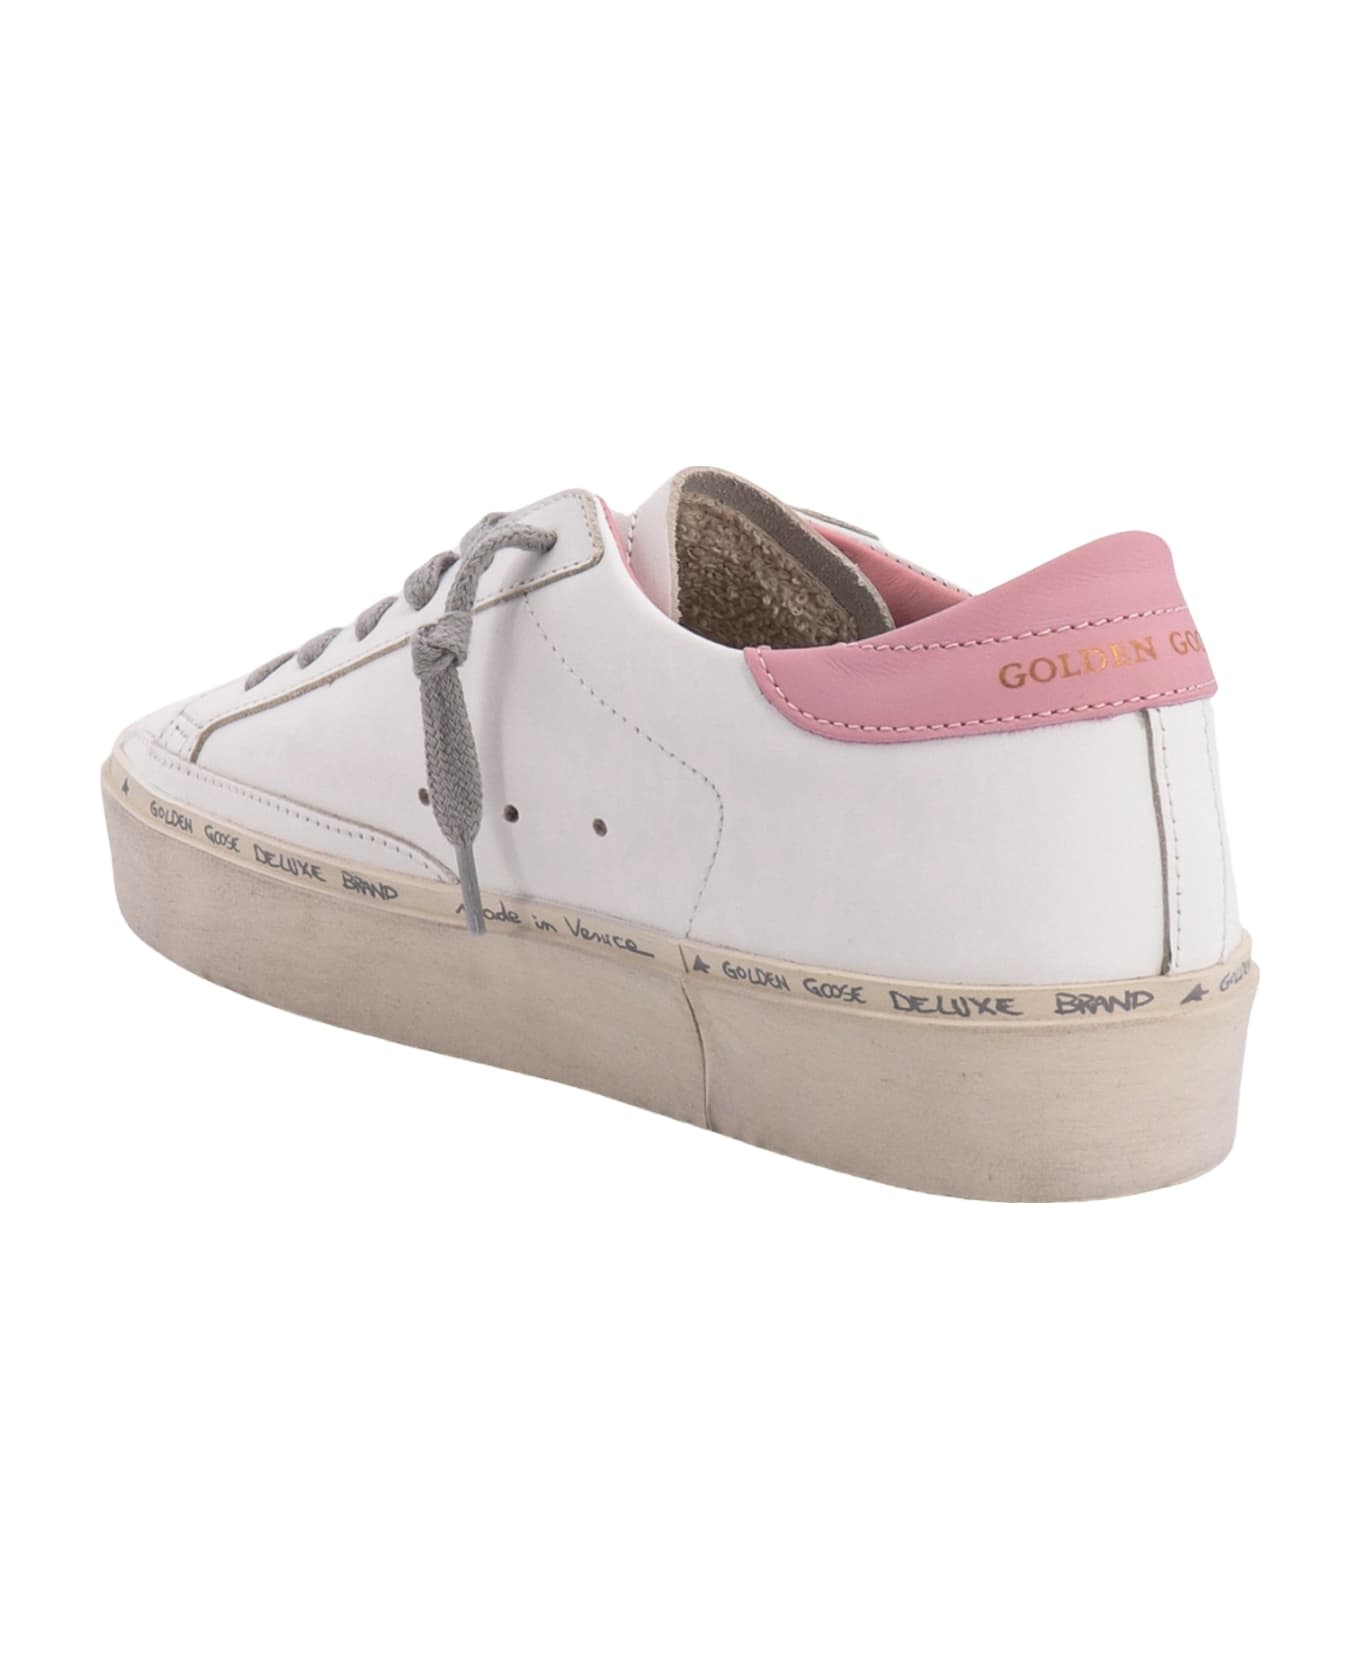 Golden Goose Hi Star Sneakers - White/Antique Pink